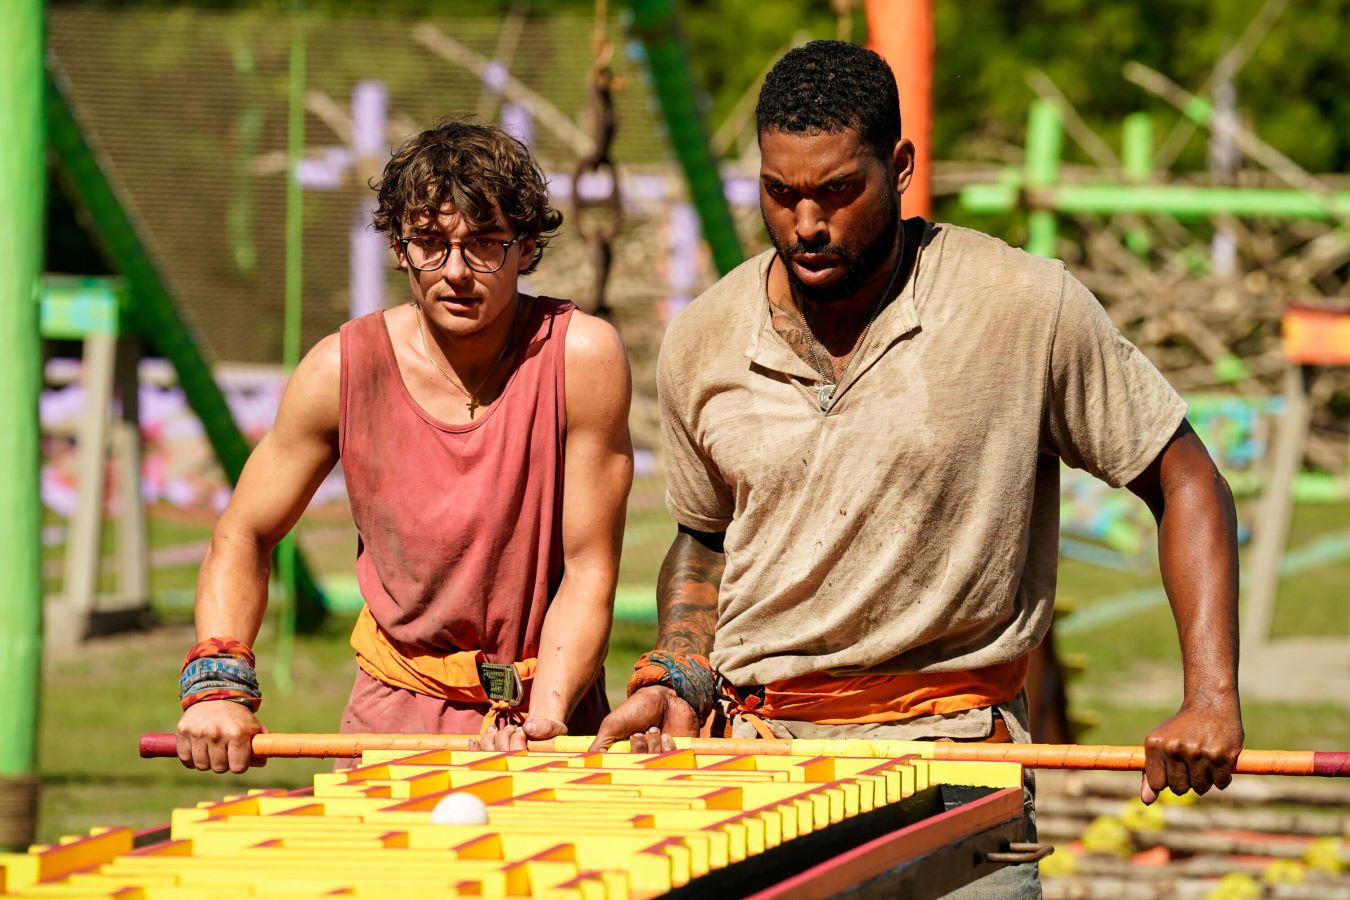 Carson Garrett and Brandon Cottom compete in an Immunity Challenge in 'Survivor 44' on CBS. Carson wears a pink tank top. Brandon wears a light beige shirt.